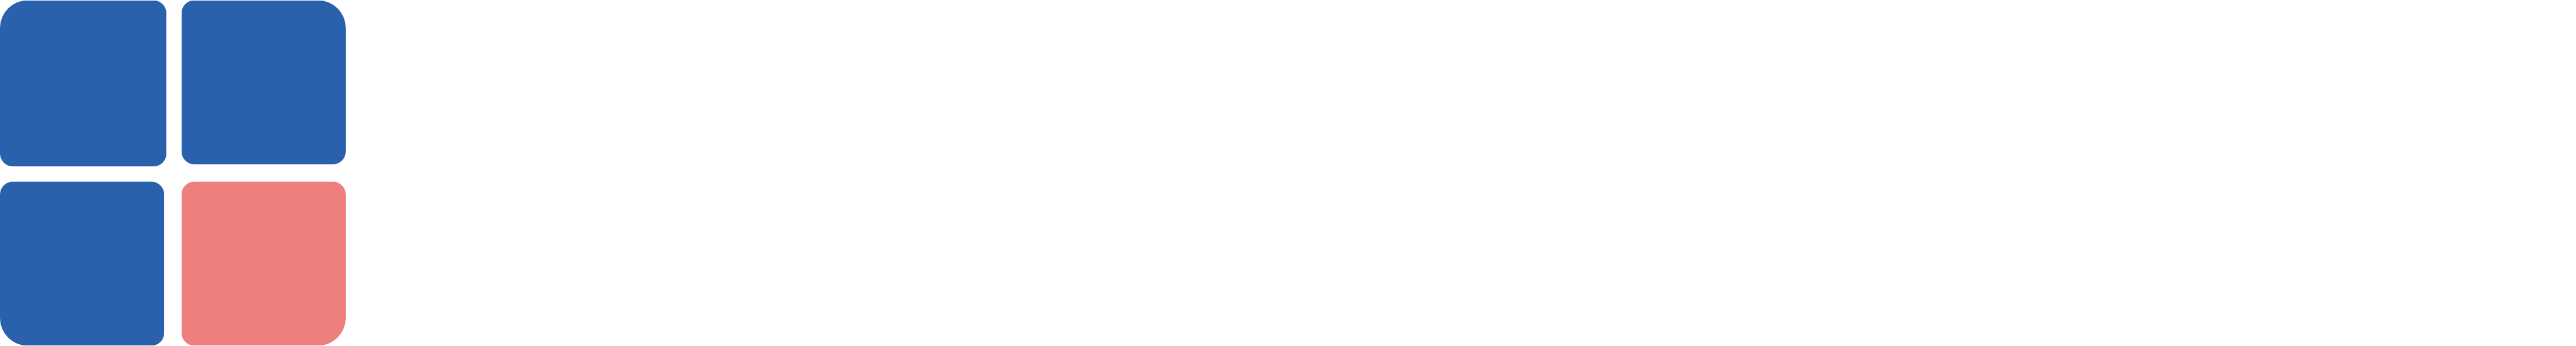 mediagate logo